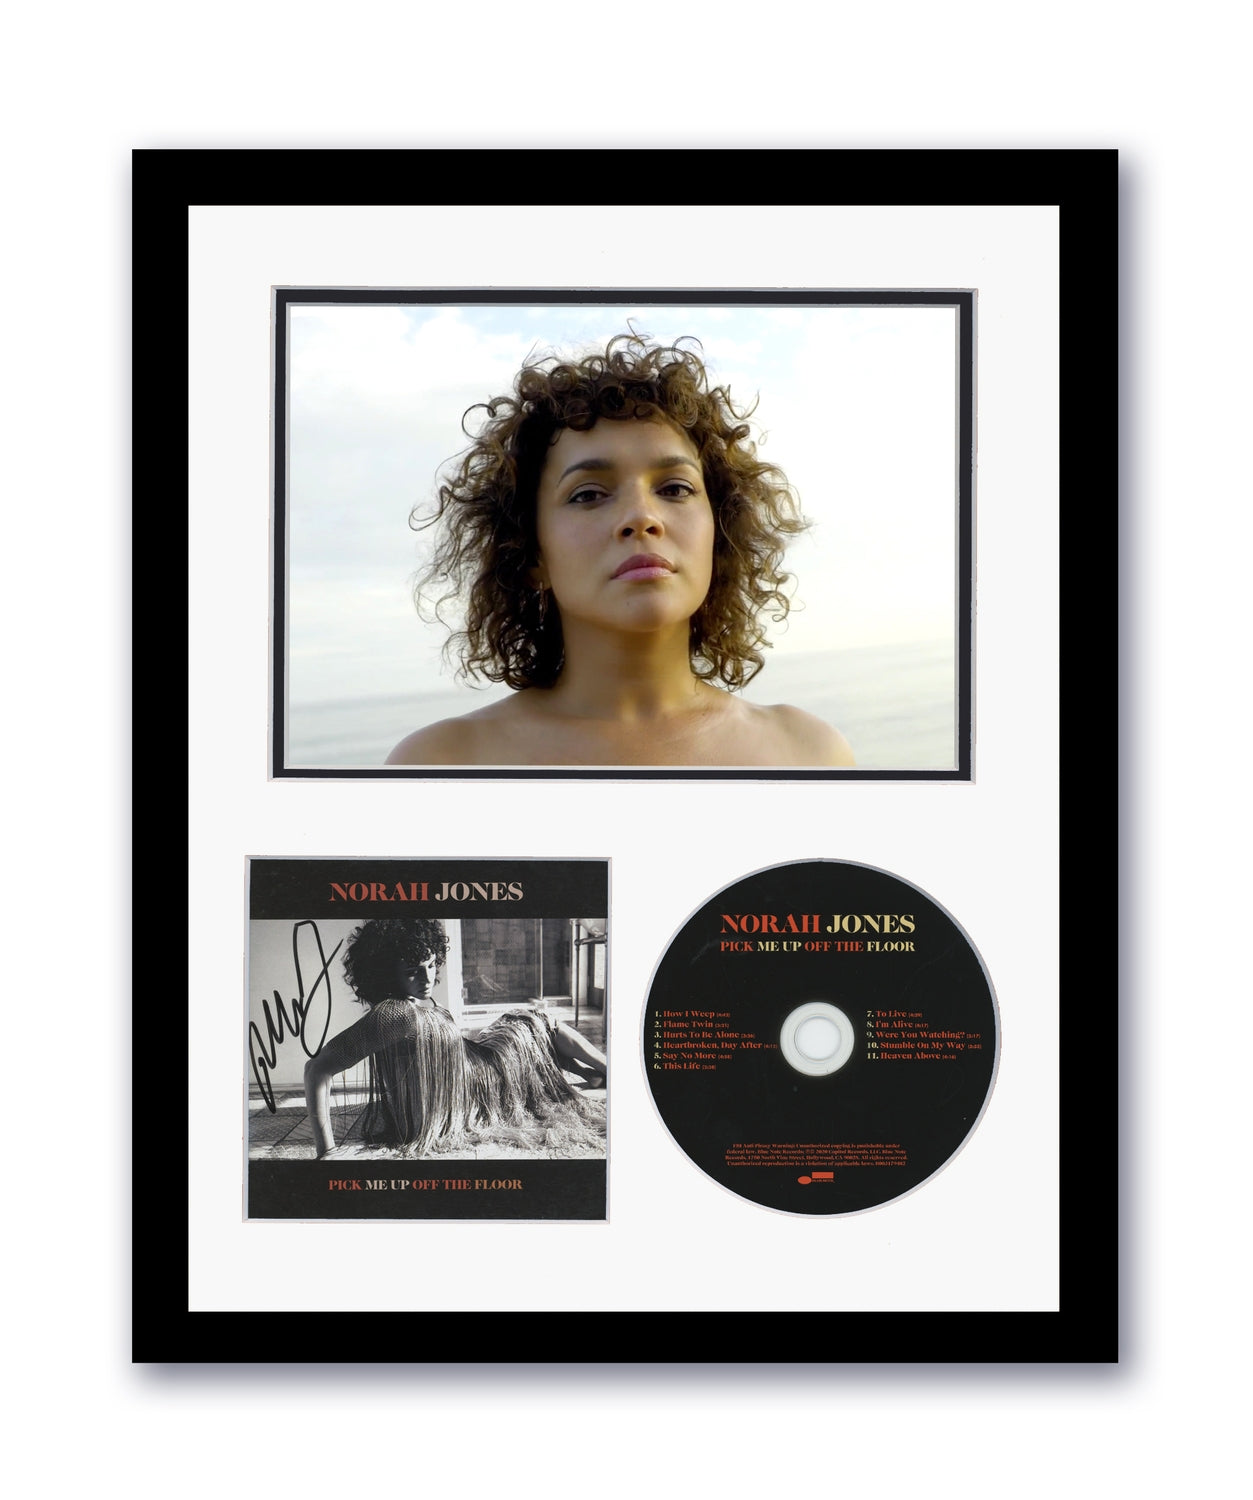 Norah Jones Autograph Signed 11x14 Framed CD Photo Pick Me Up Off The Floor ACOA 4